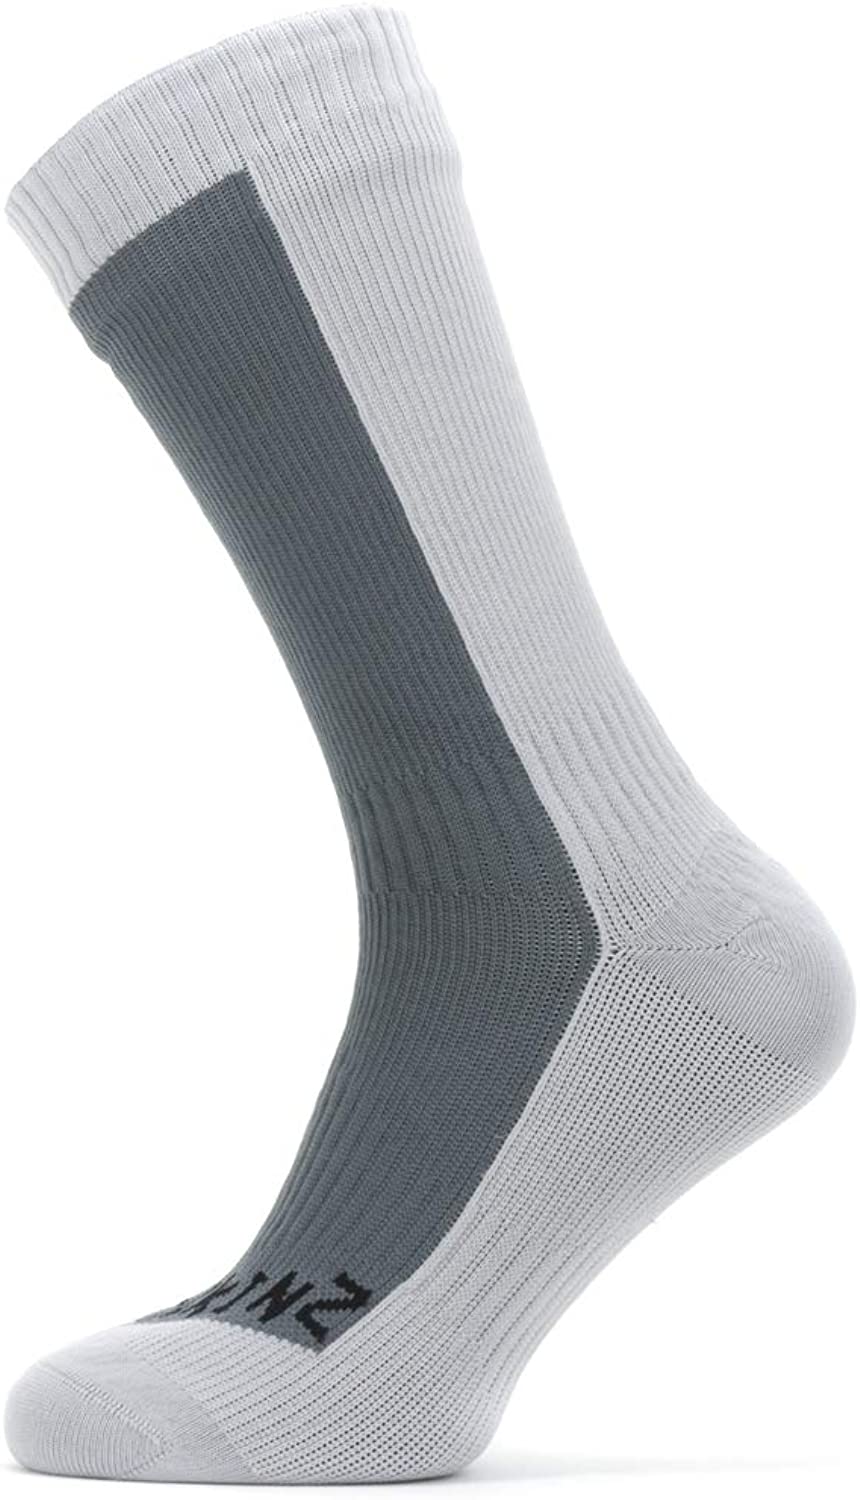 SEALSKINZ Unisex Waterproof Cold Weather Mid Length Sock, Grey, Medium